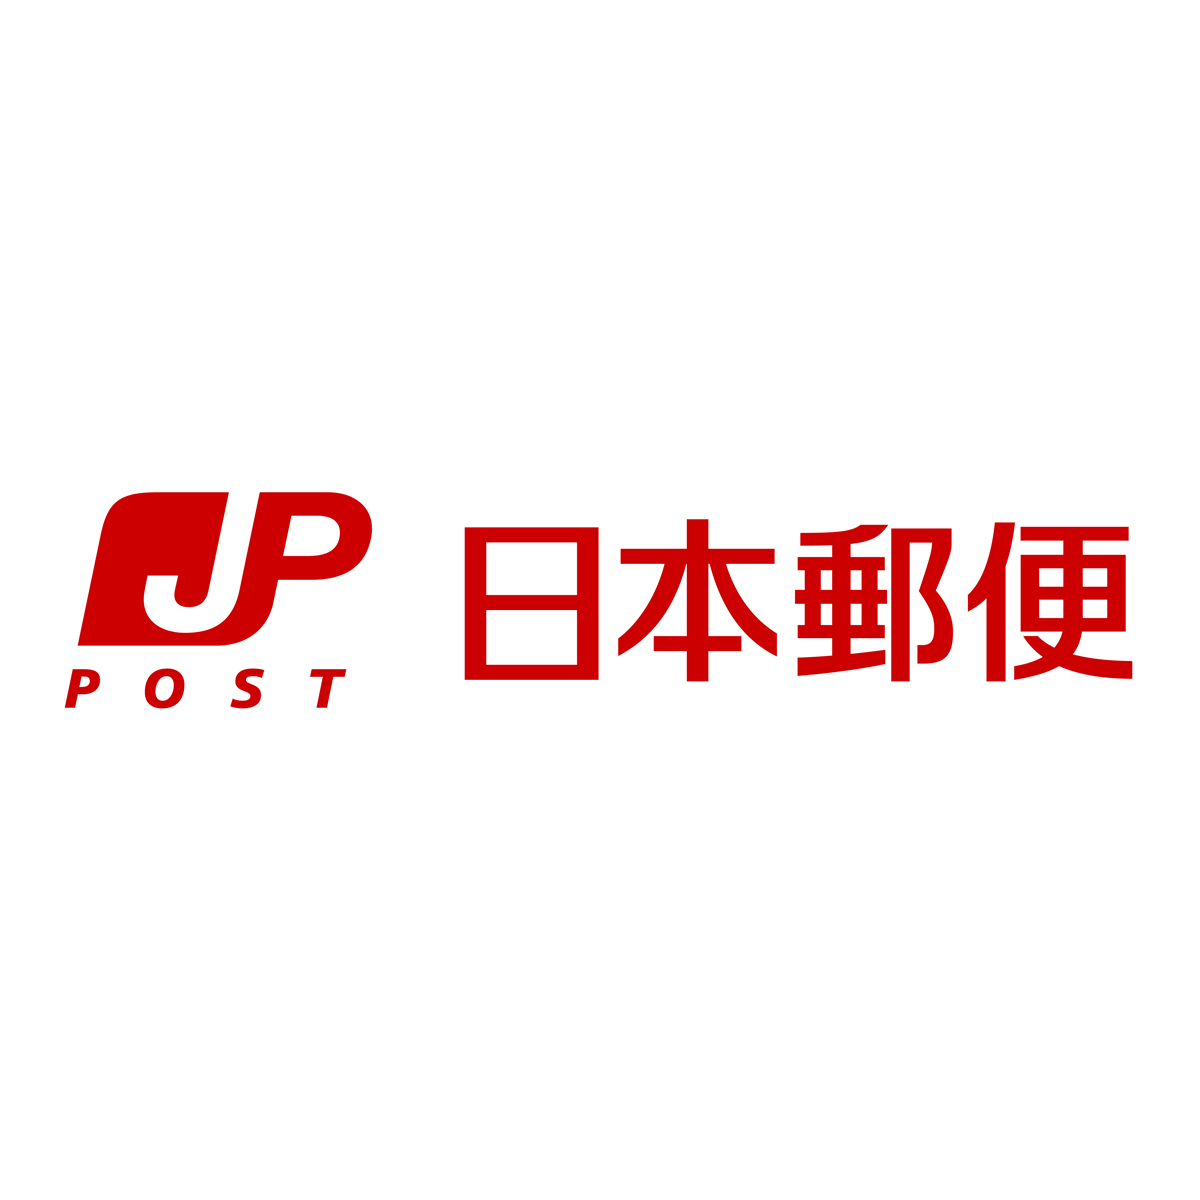 www.post.japanpost.jp